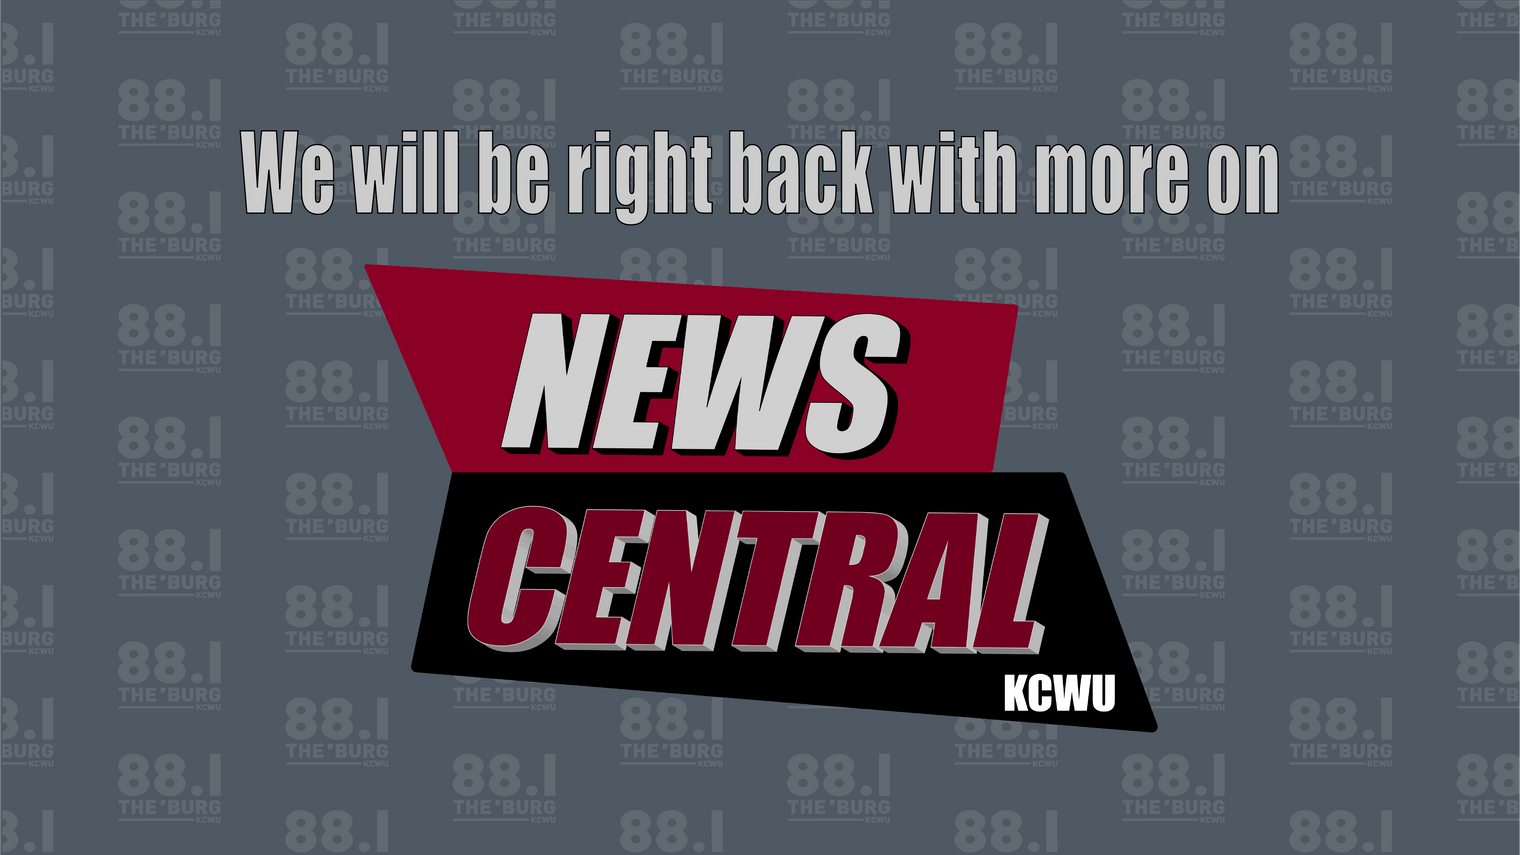 News Central